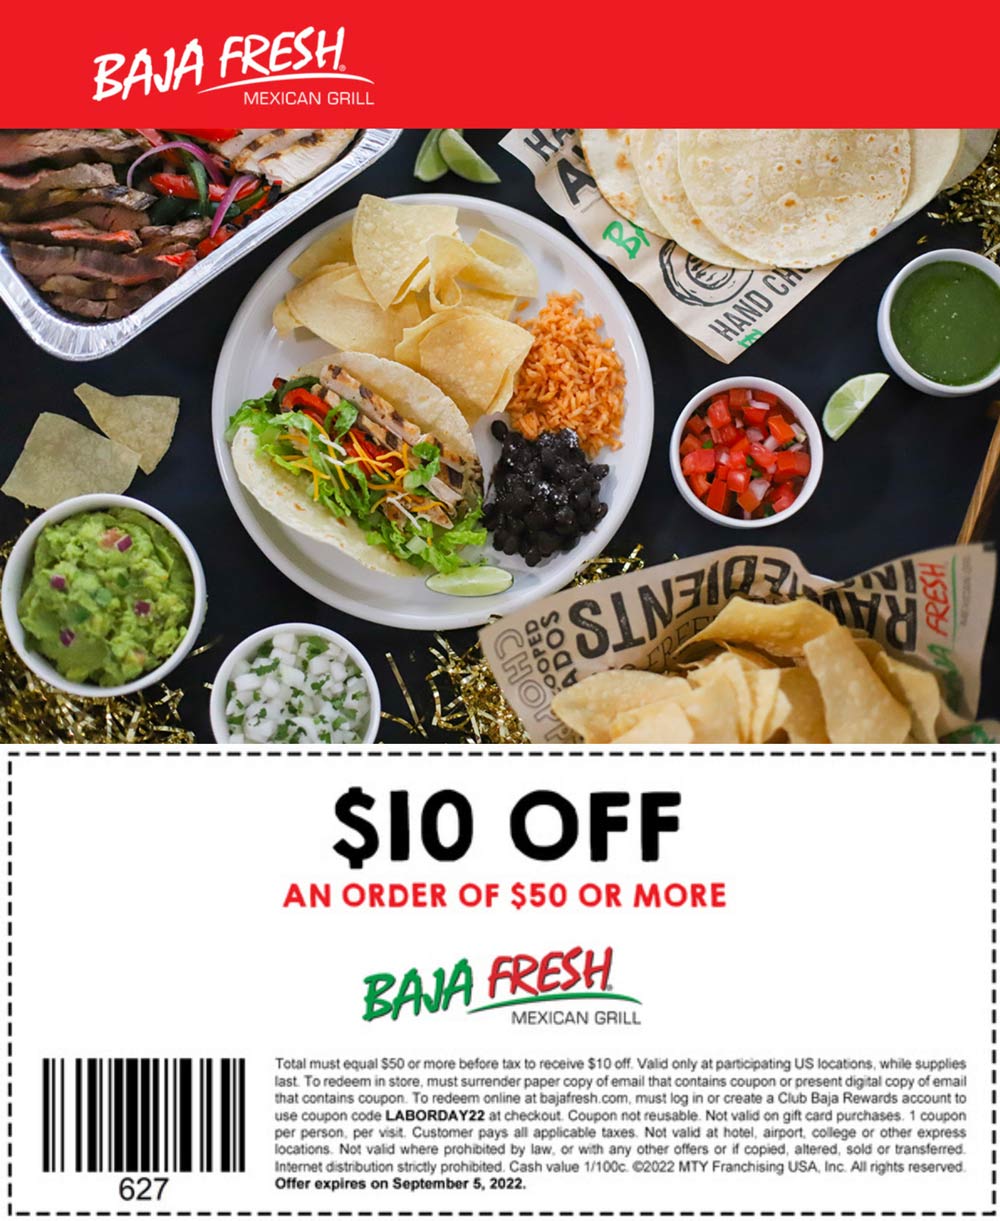 Baja Fresh restaurants Coupon  $10 off $50 at Baja Fresh Mexican grill, or online via promo code LABORDAY22 #bajafresh 